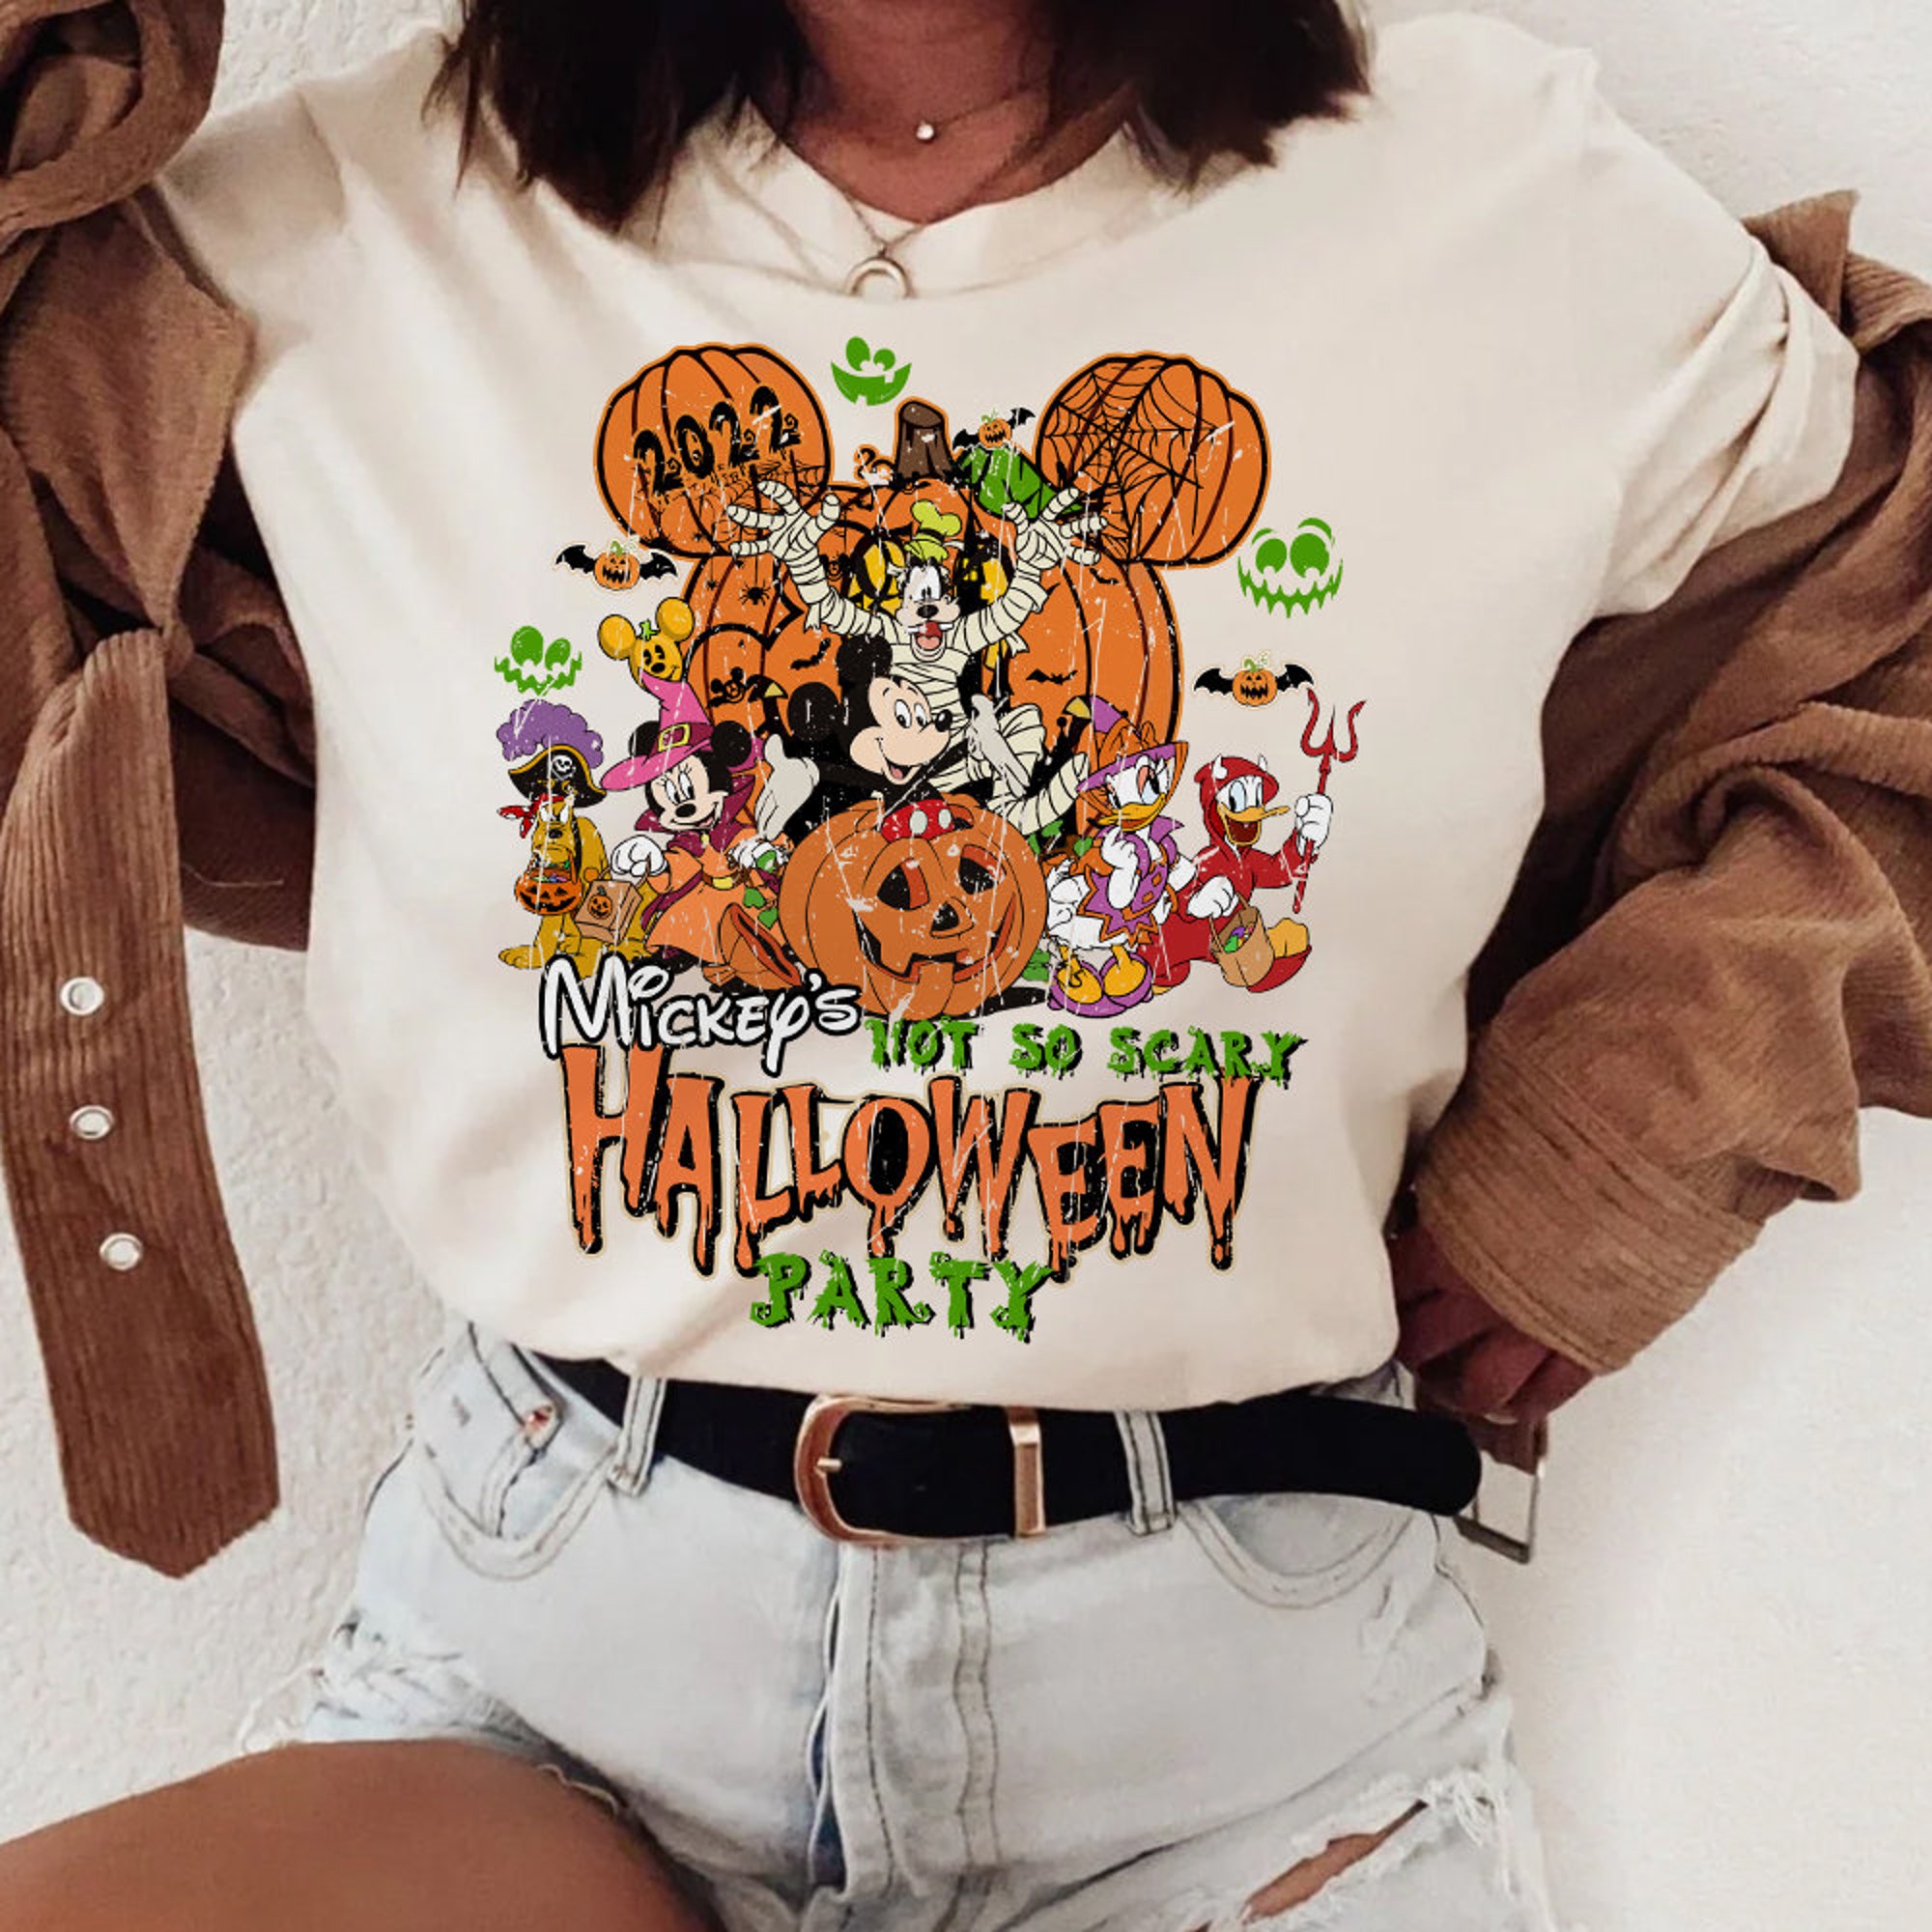 Mickey's not so scary Halloween party 2022 shirt